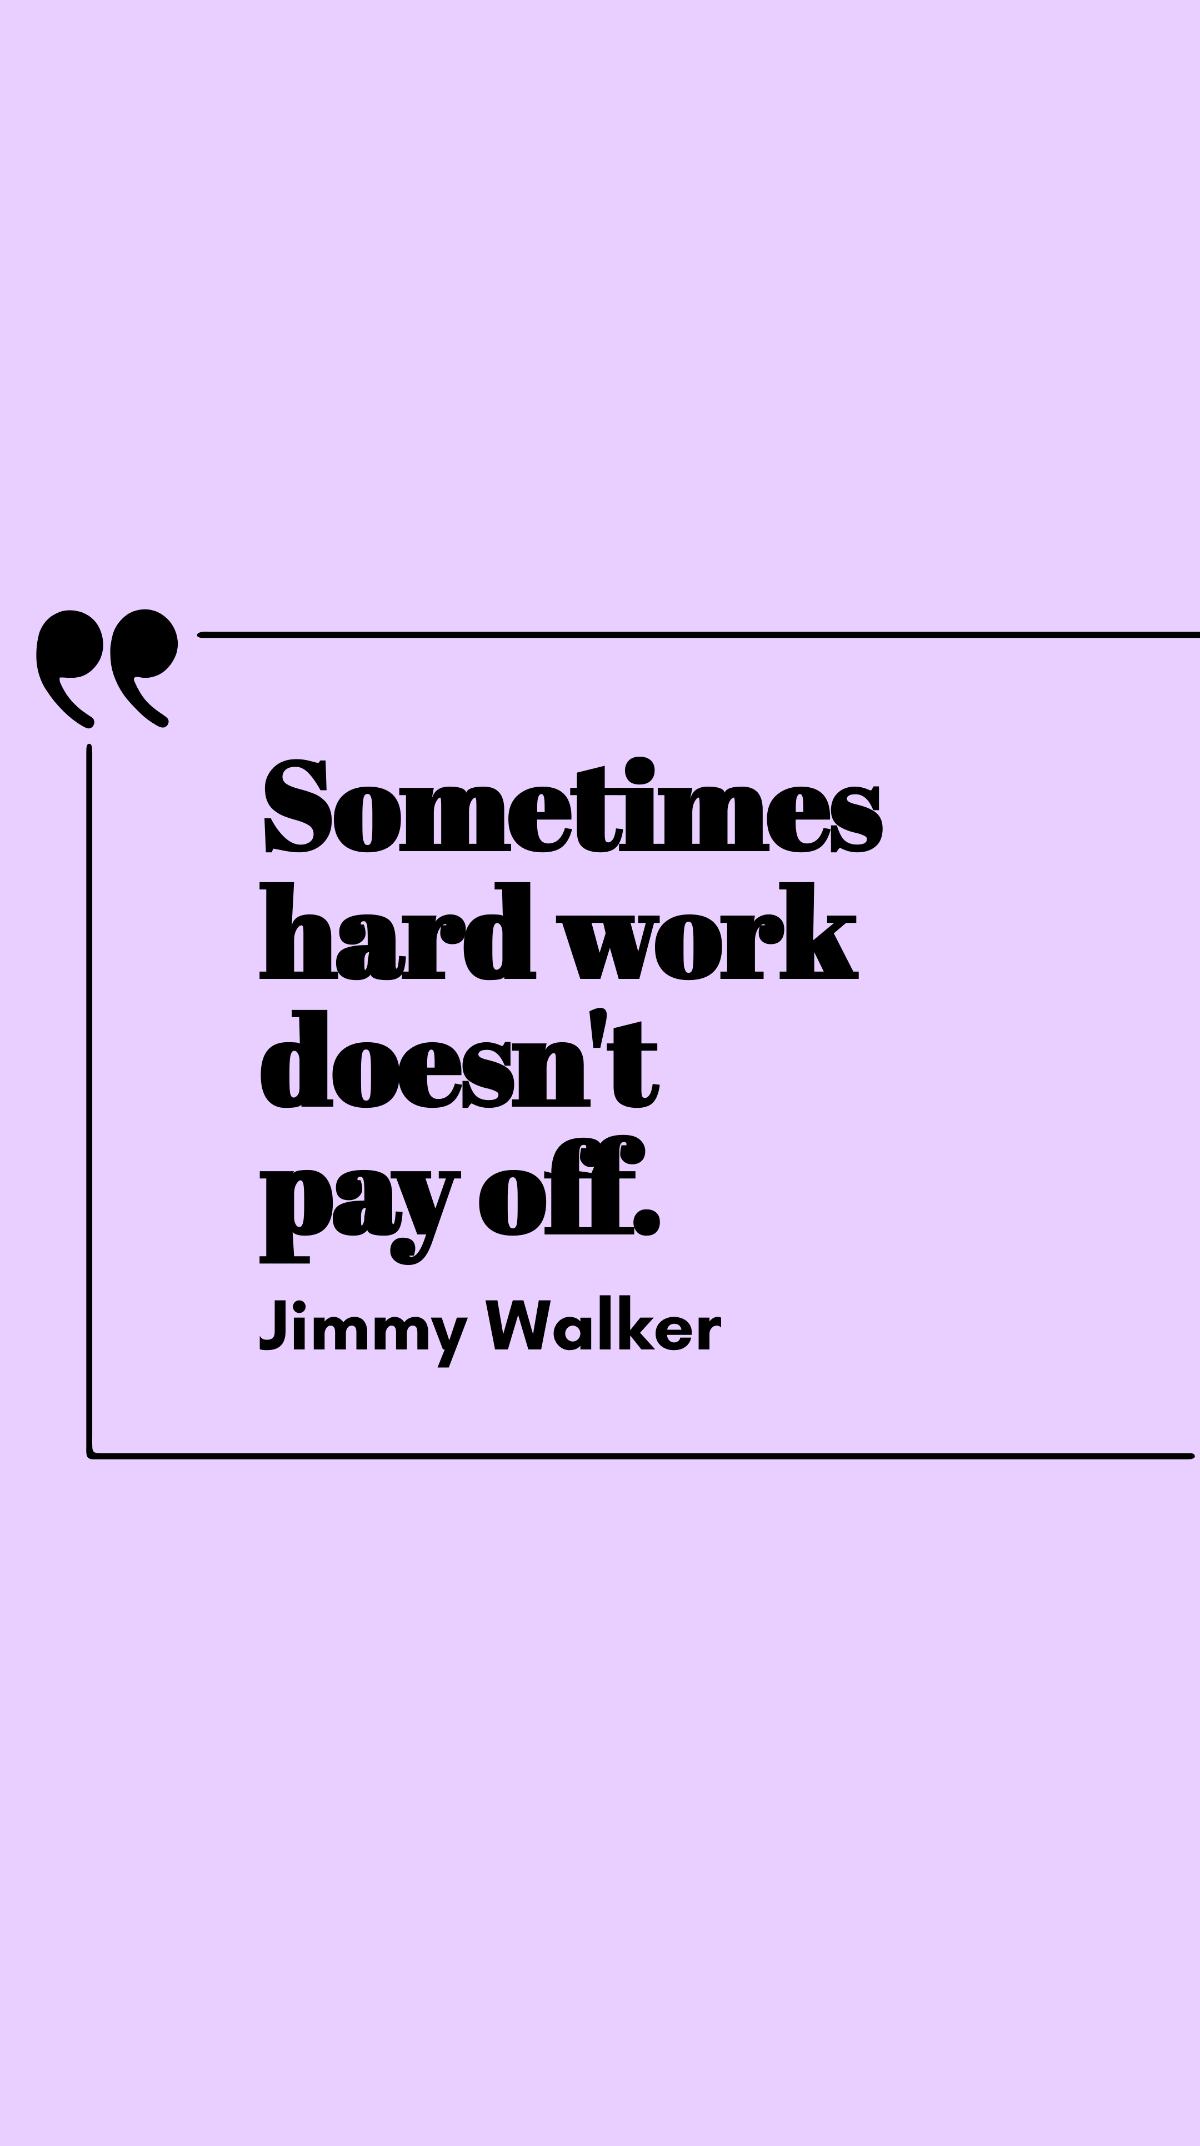 Jimmy Walker - Sometimes hard work doesn't pay off. Template